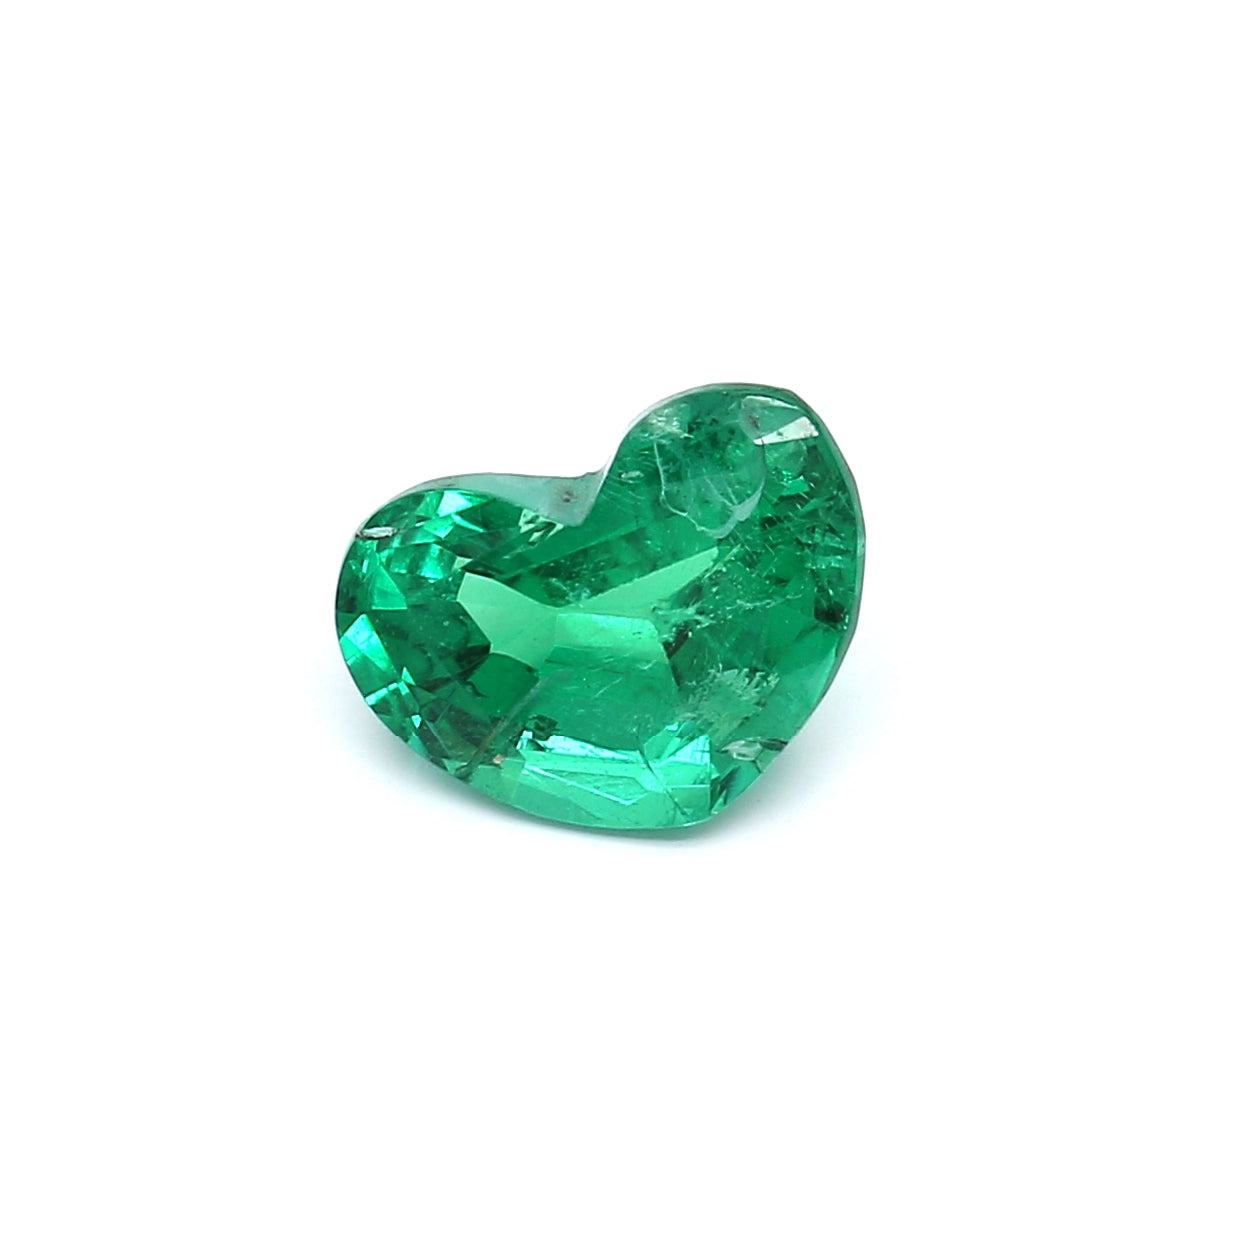 2.04ct Heart Shape Emerald, Minor Oil, Russia - 7.27 x 9.57 x 5.15mm